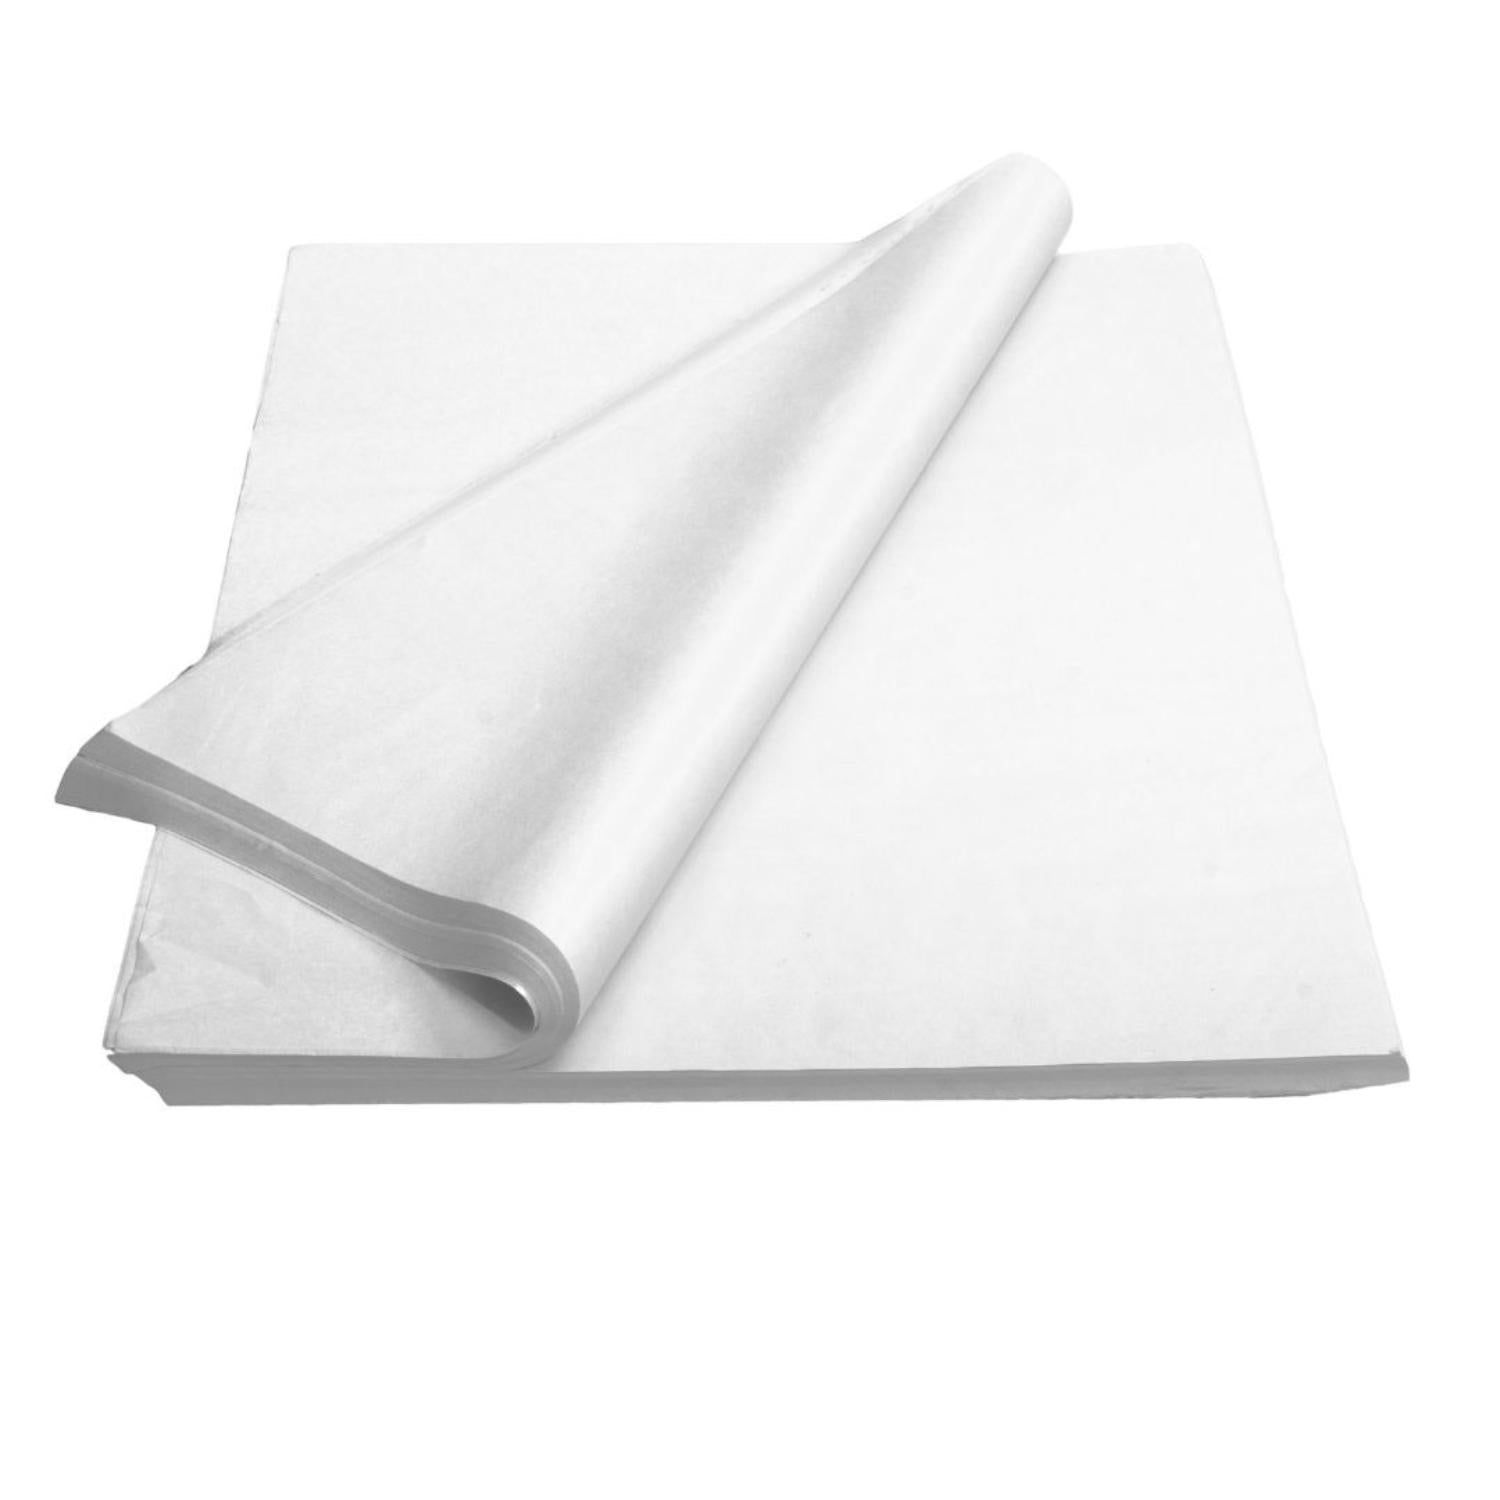 Acid Free White Tissue Paper per ream of 480 sheets